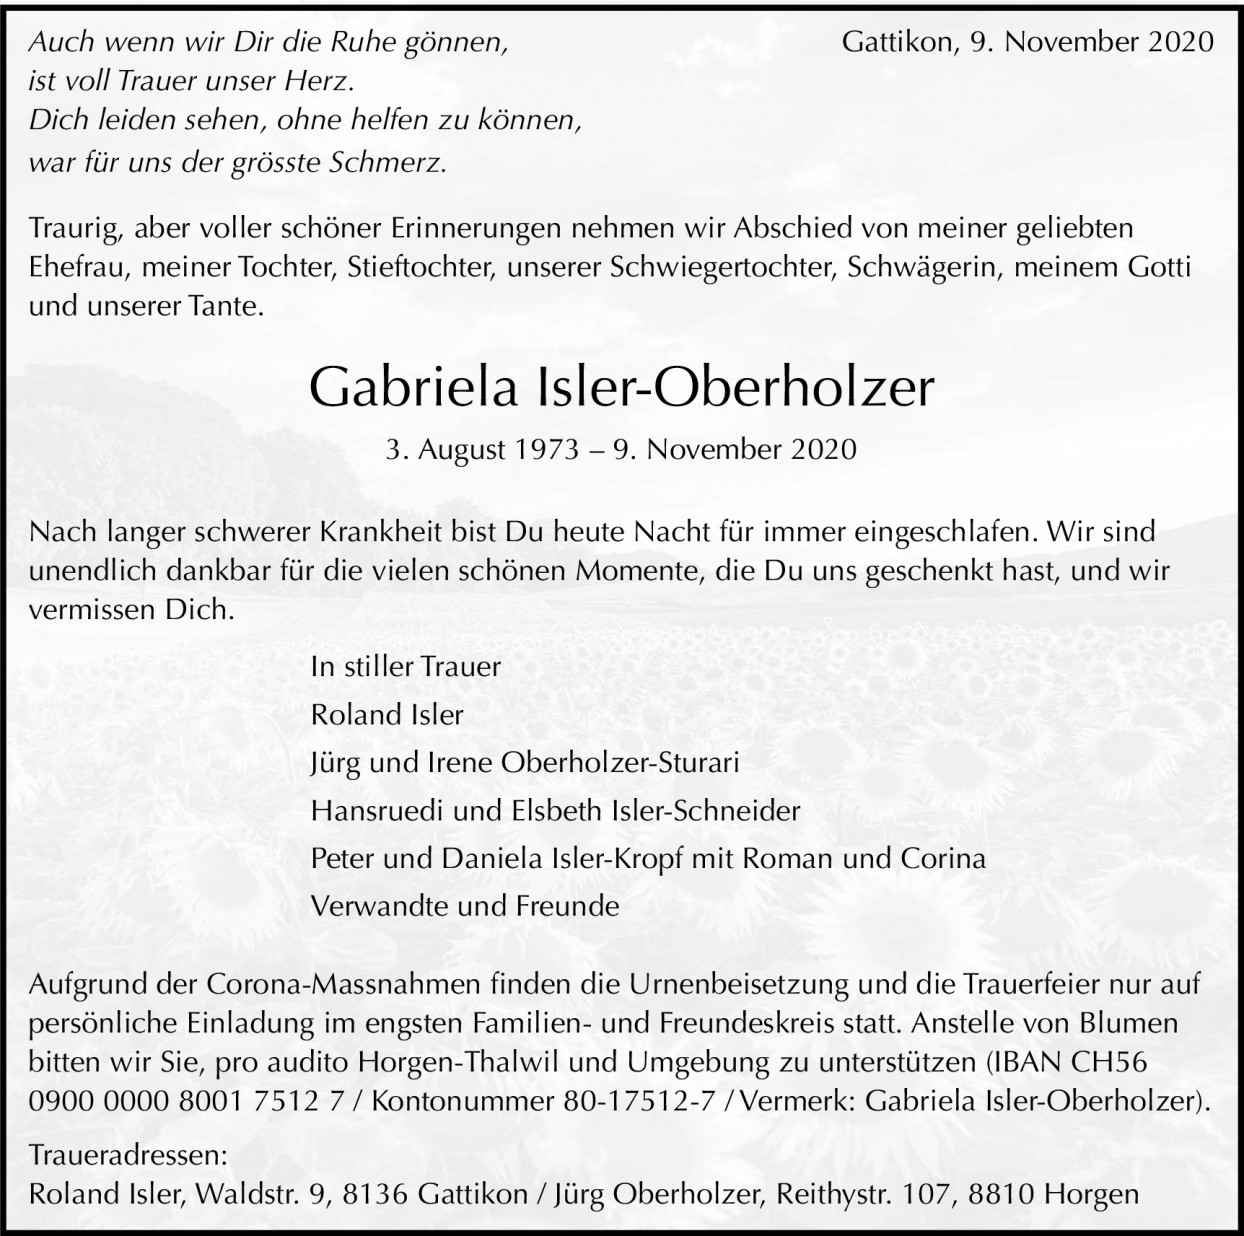 Gabriela Isler-Oberholzer